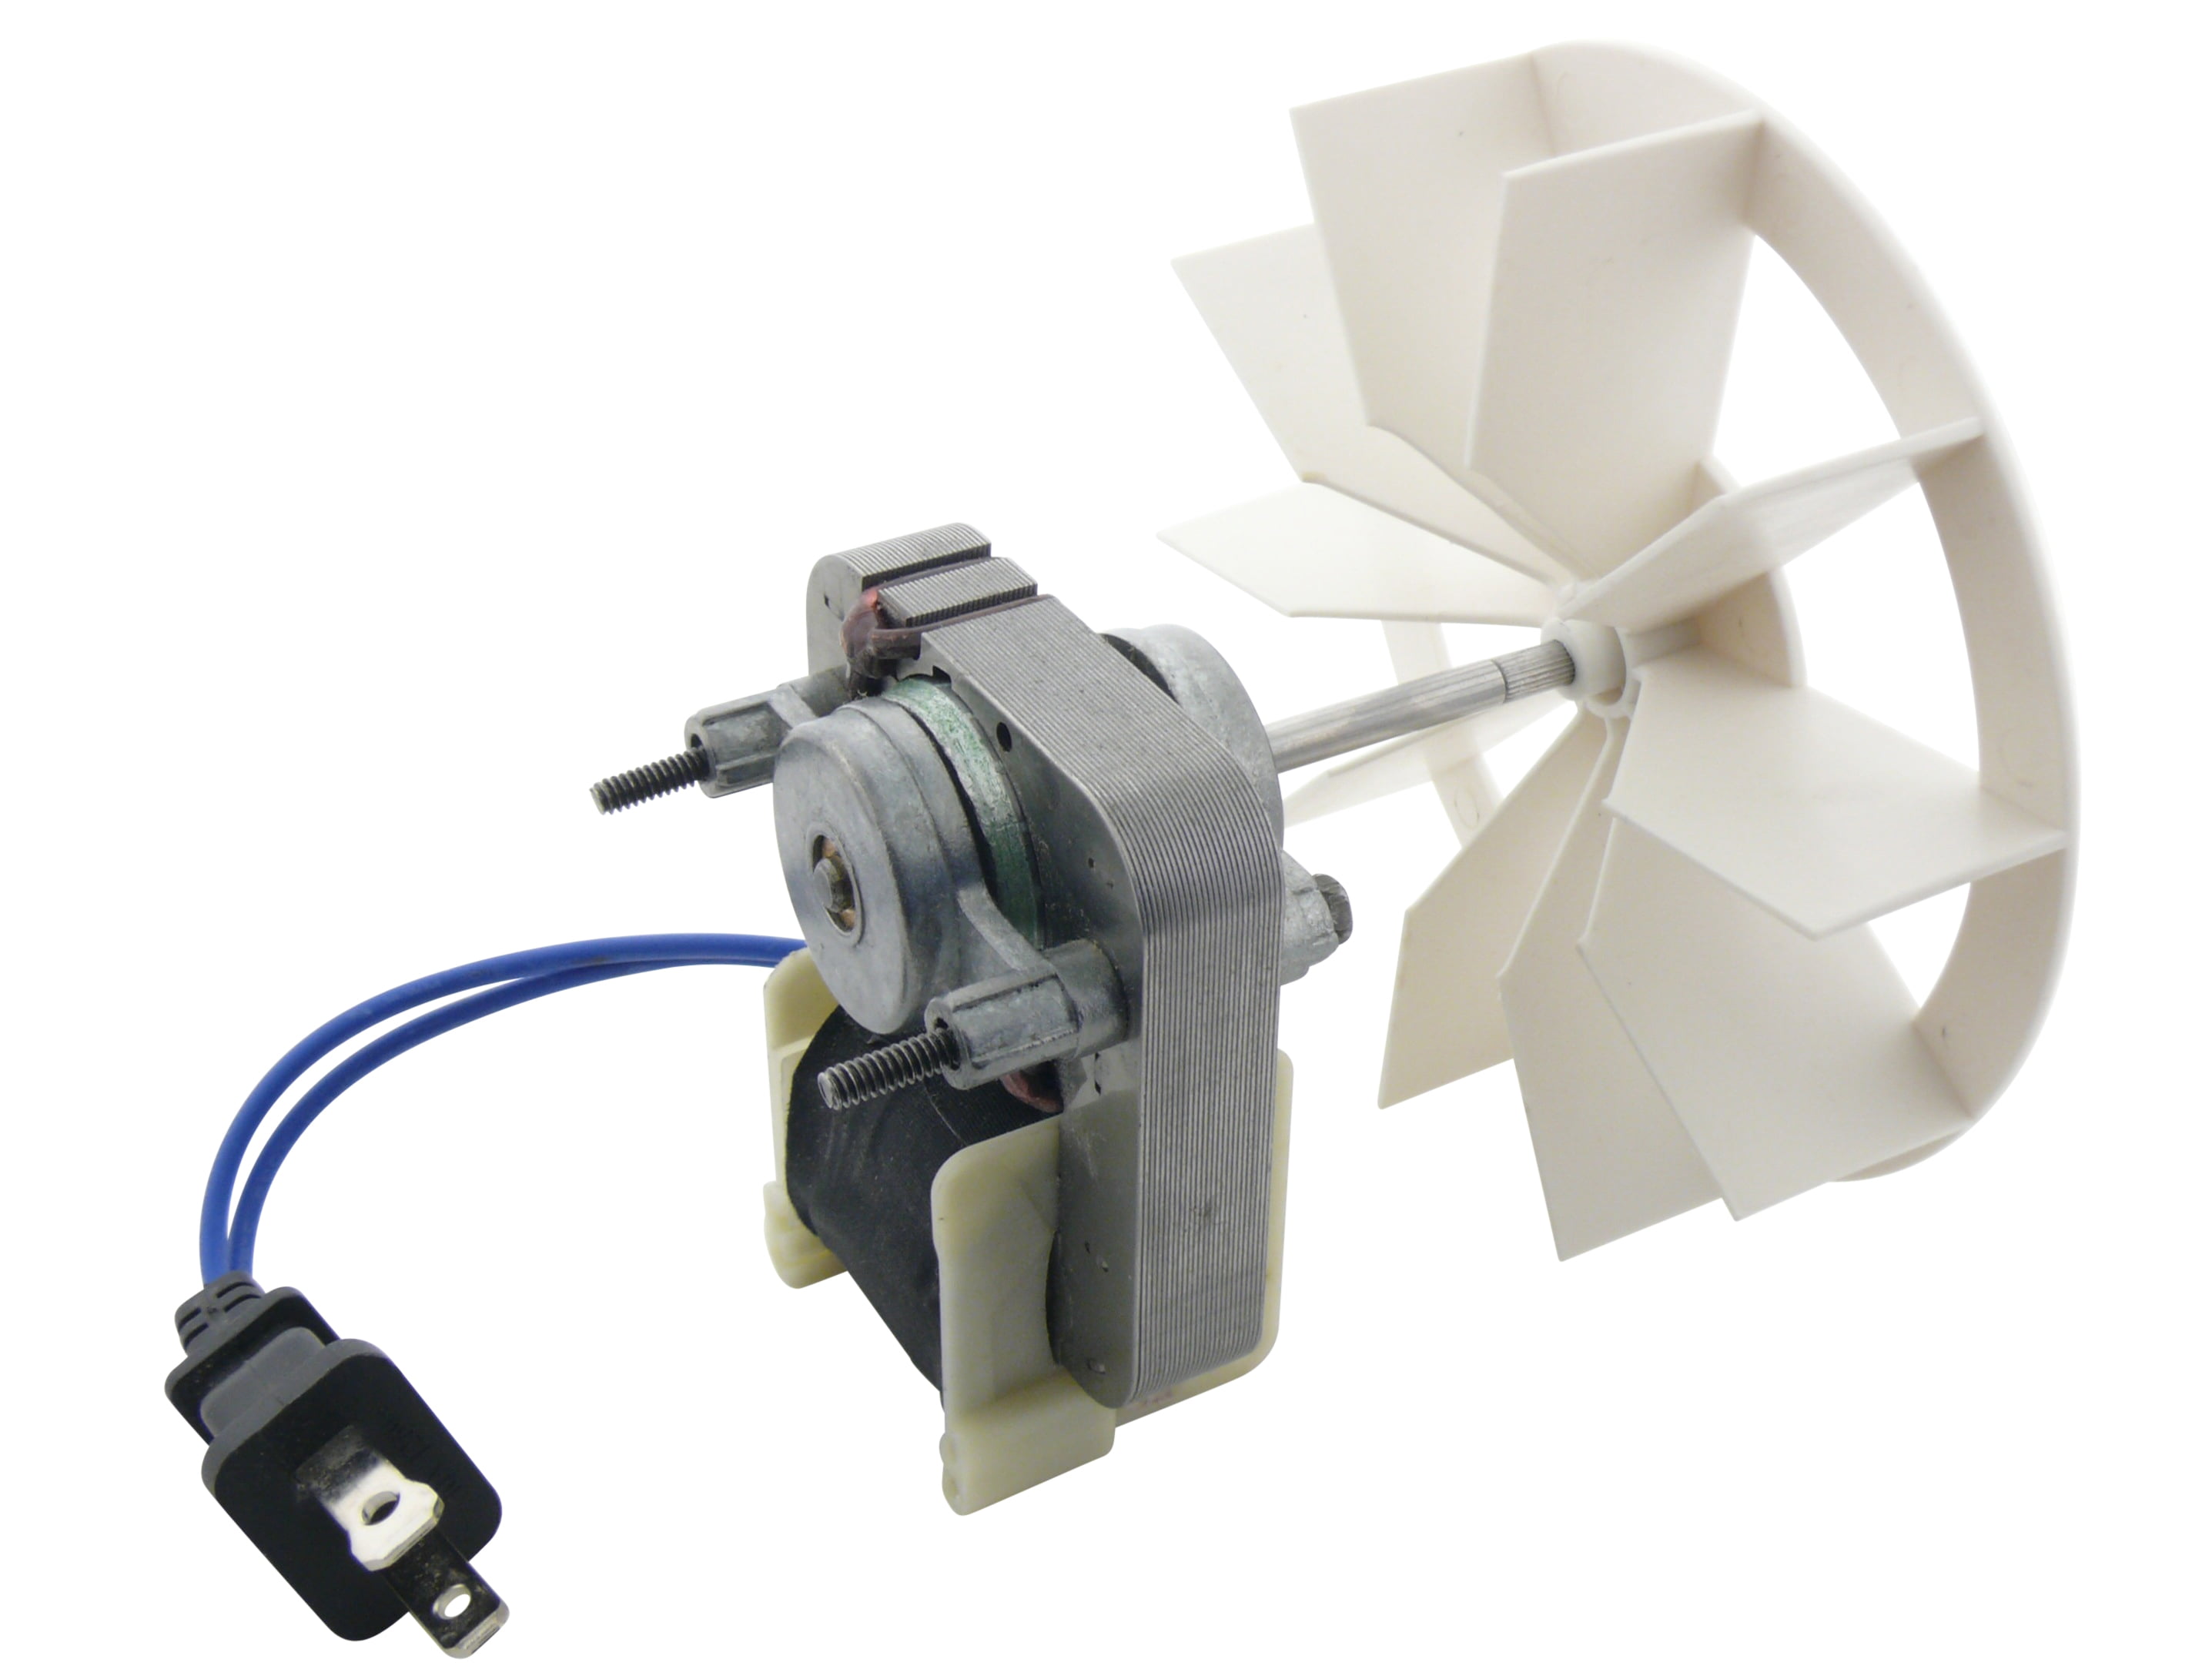 ge profile kitchen vent fan replacement light kit